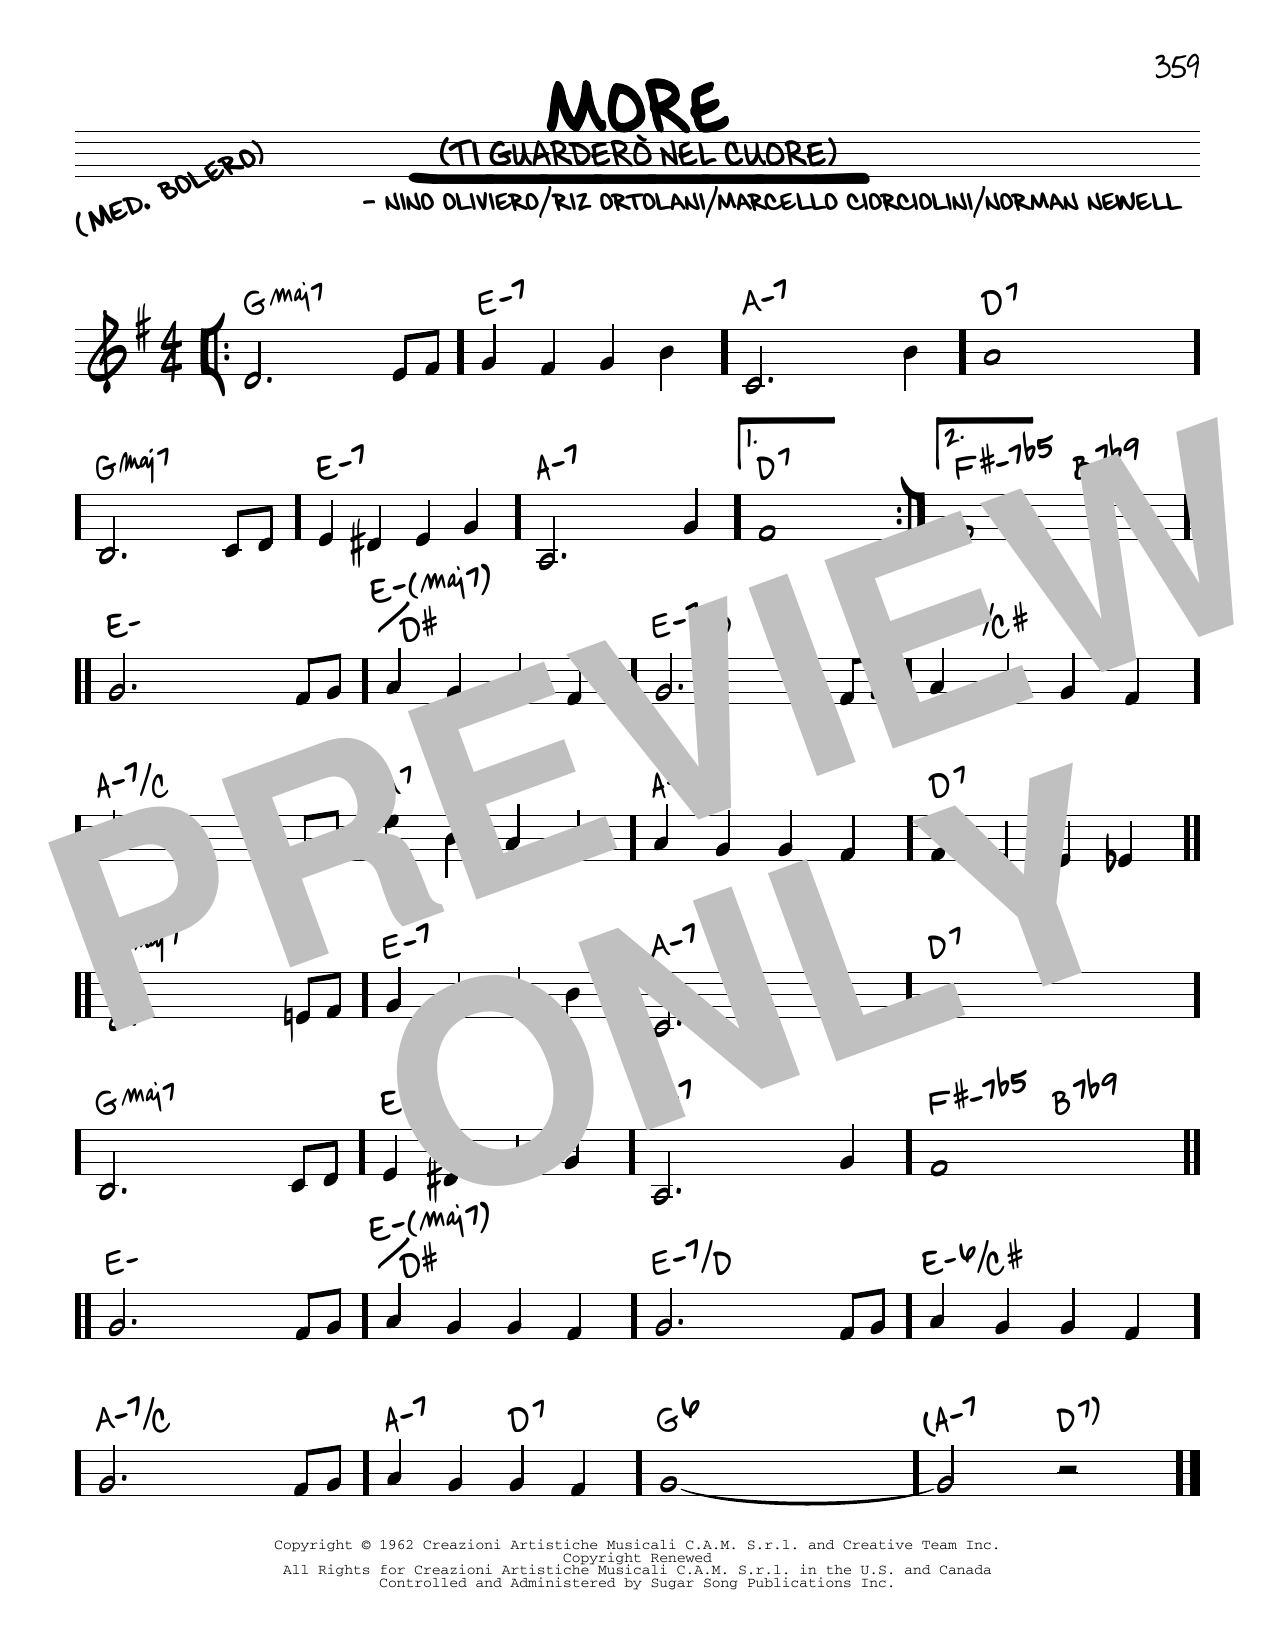 Marcello Ciorciolini More (Ti Guardero Nel Cuore) Sheet Music Notes & Chords for Guitar Tab - Download or Print PDF